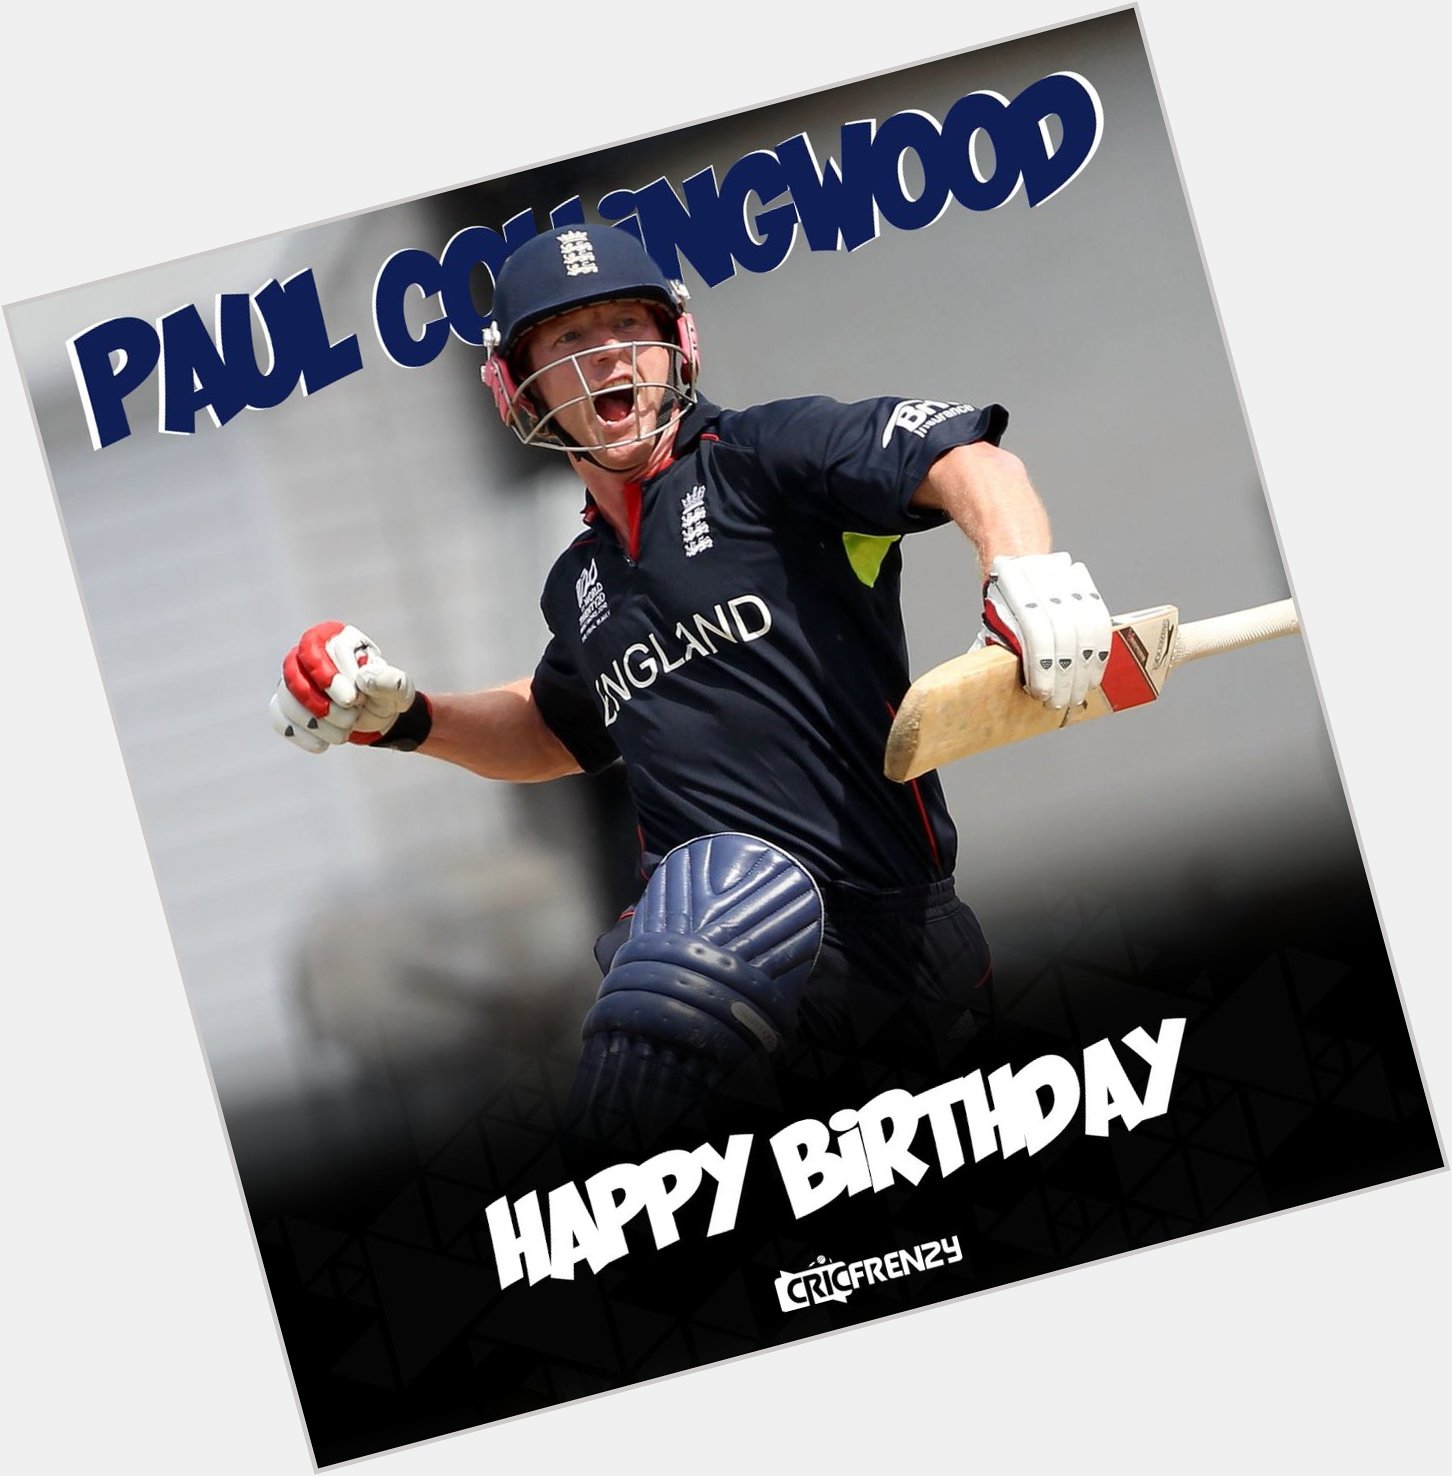 2010 ICC World T20 winning team captain 
Happy birthday Paul Collingwood    